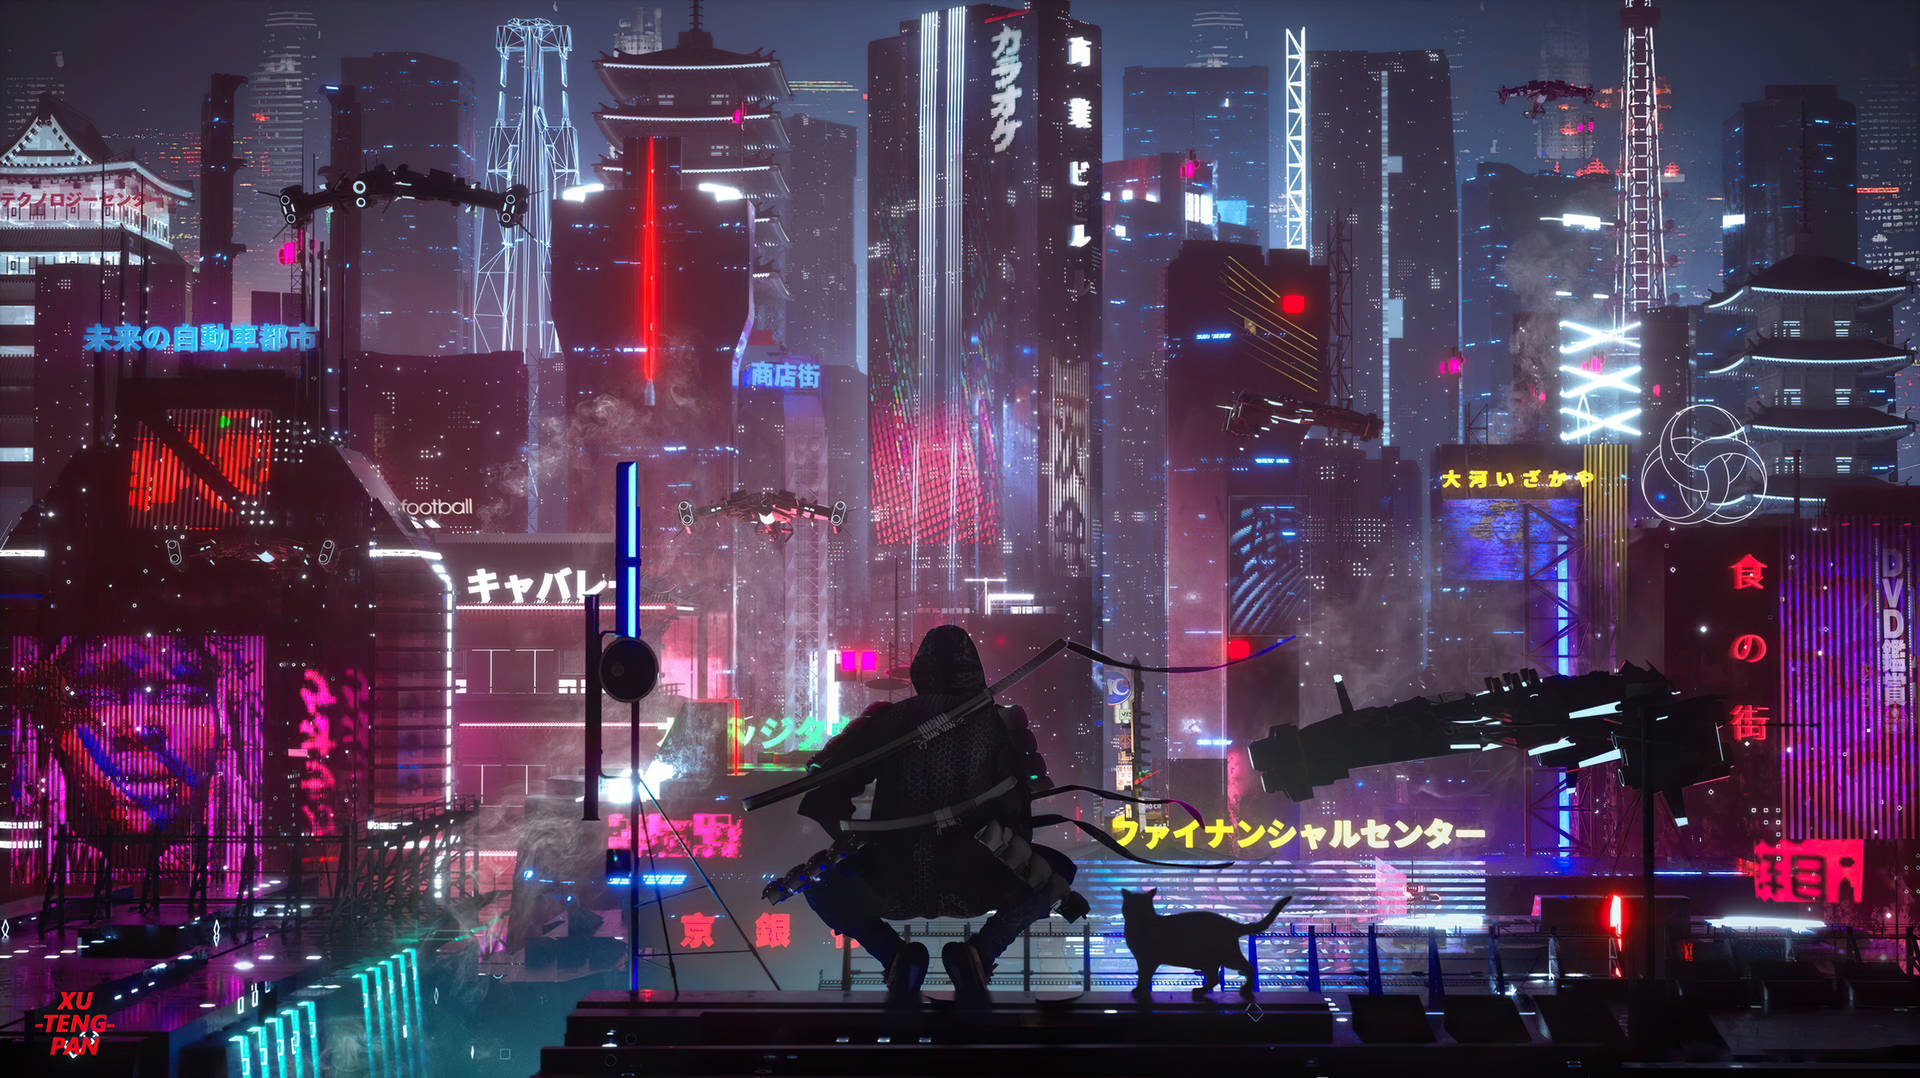 3840X2156 Cyberpunk City Wallpaper and Background